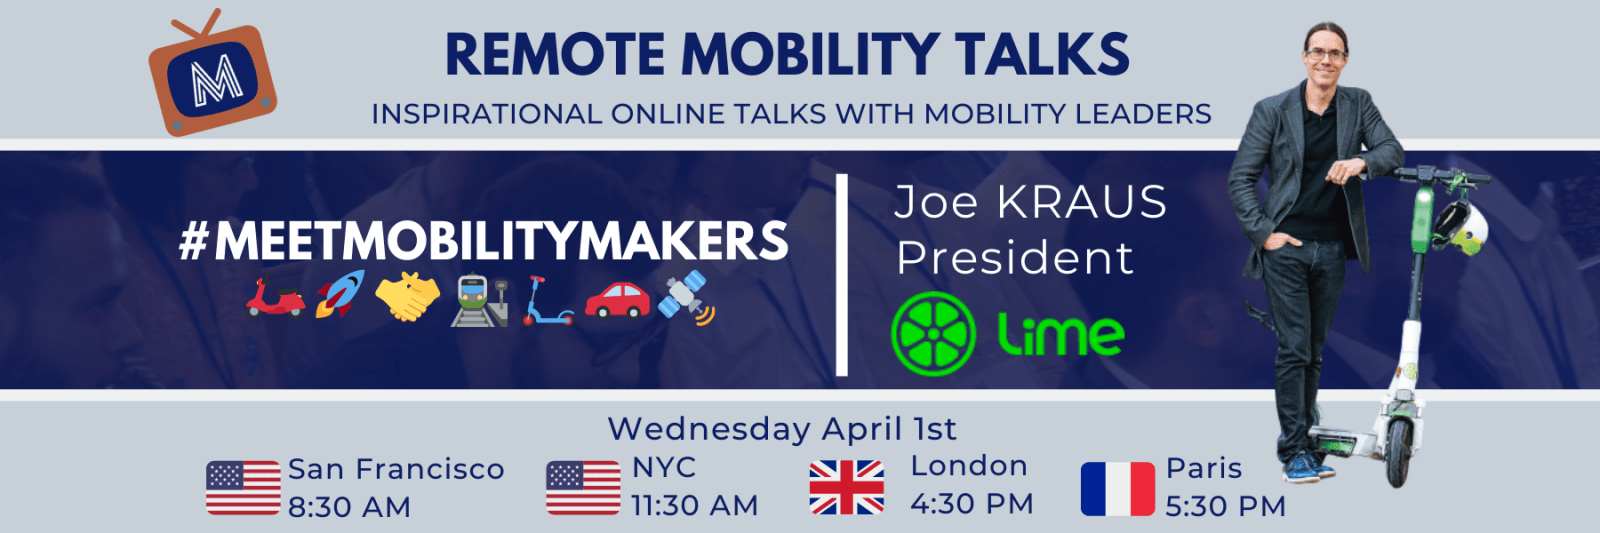 Mobility talks